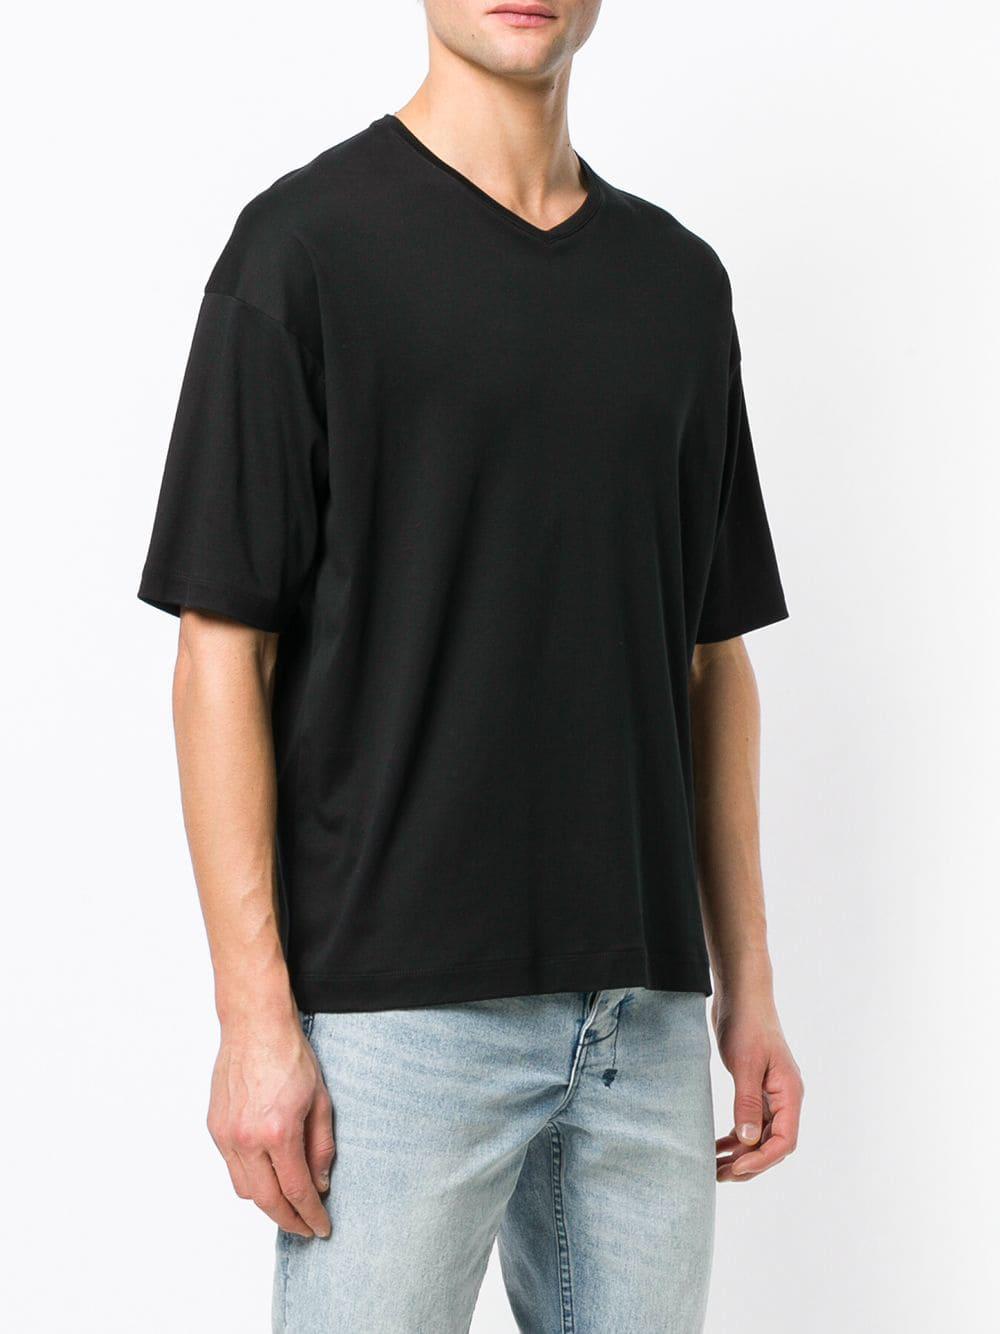 Lyst - Mackintosh Black Cotton V-neck T-shirt Gcs-026 in Black for Men